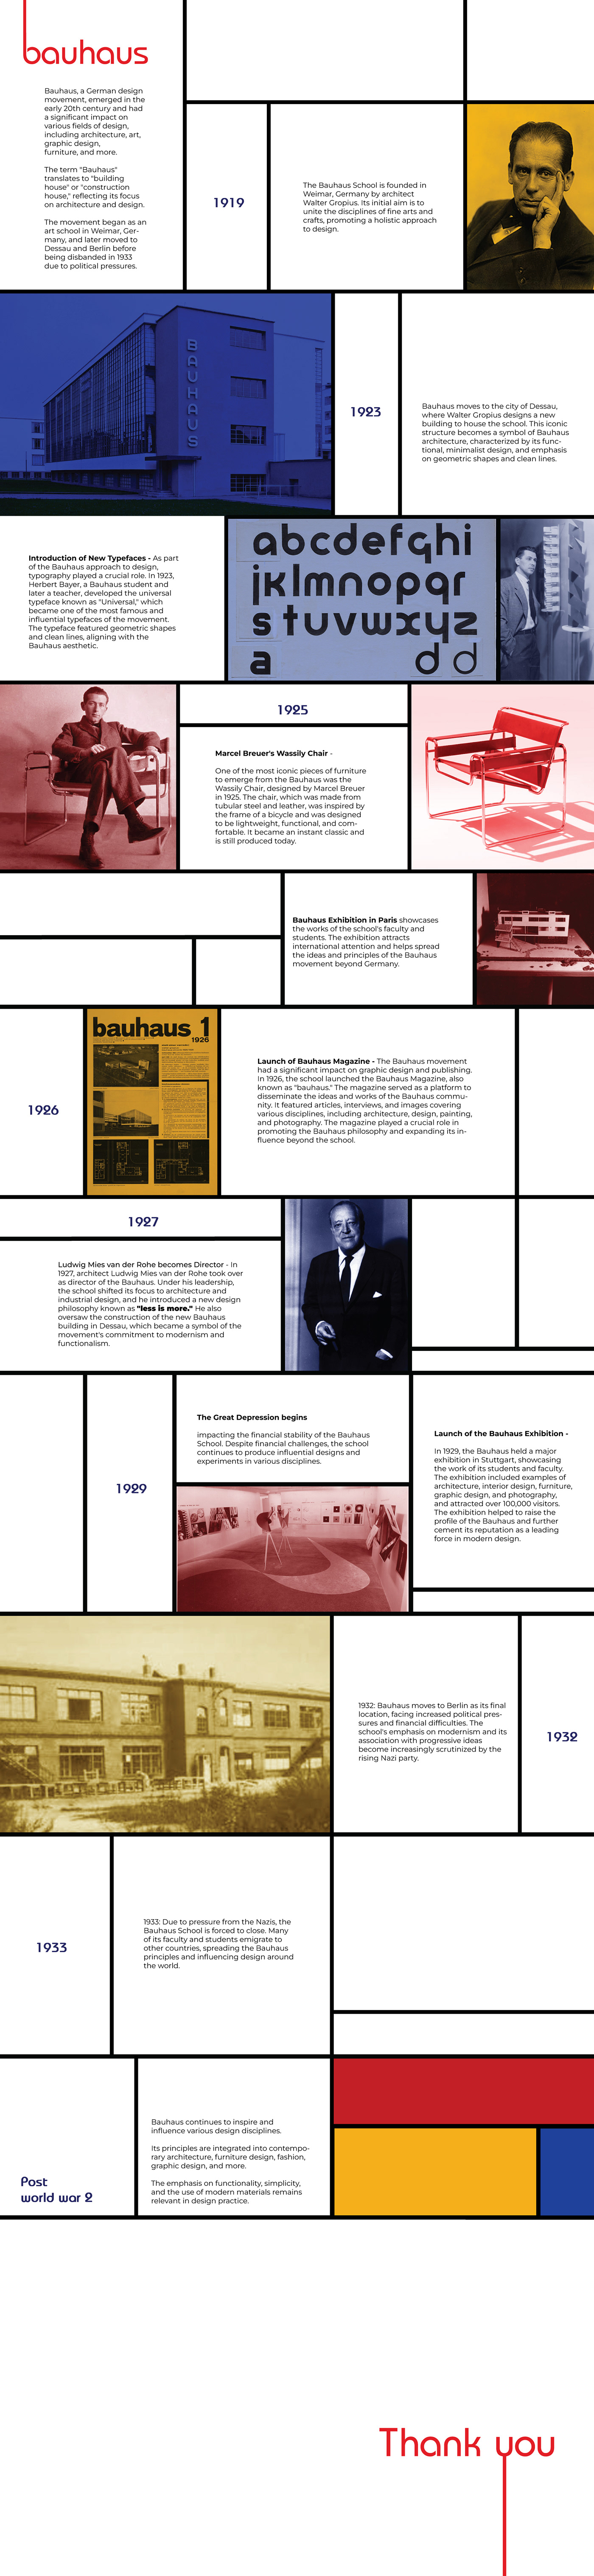 bauhaus timeline art movement Bauhaus timeline infographic data visualisation graphic design  information